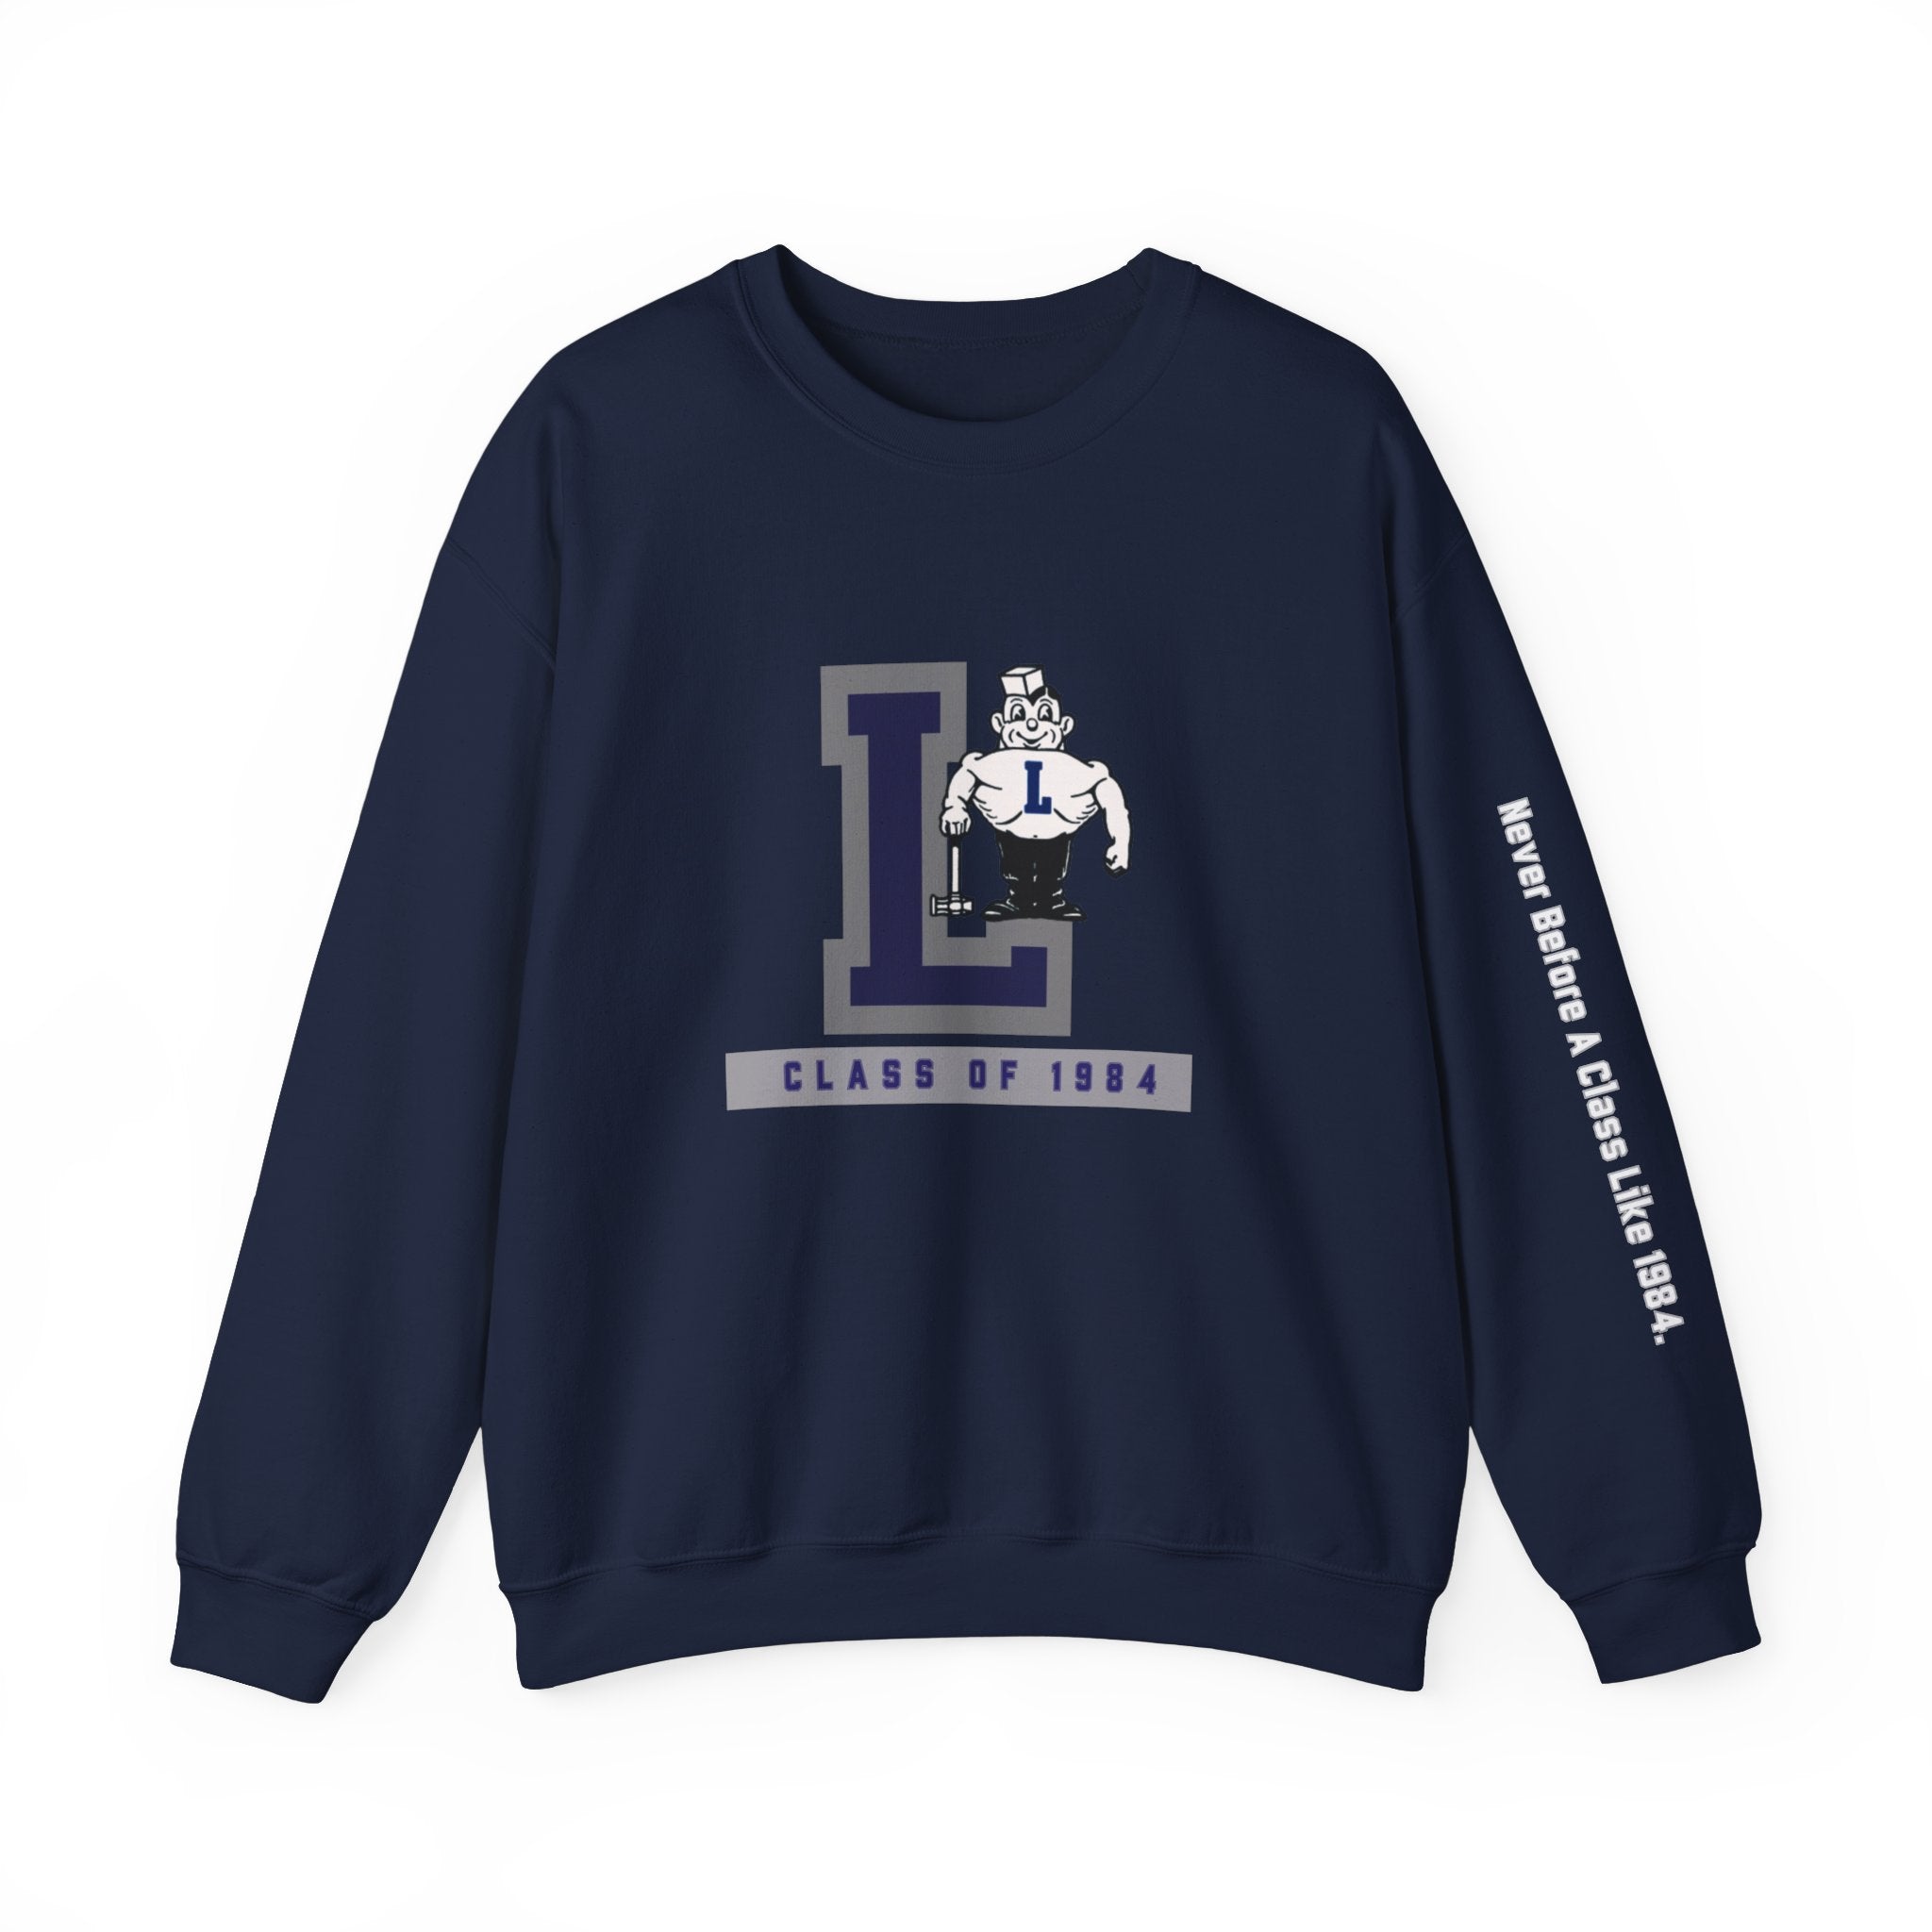 Lackwanna NY Class of 84 Gildan Unisex Sweatshirt